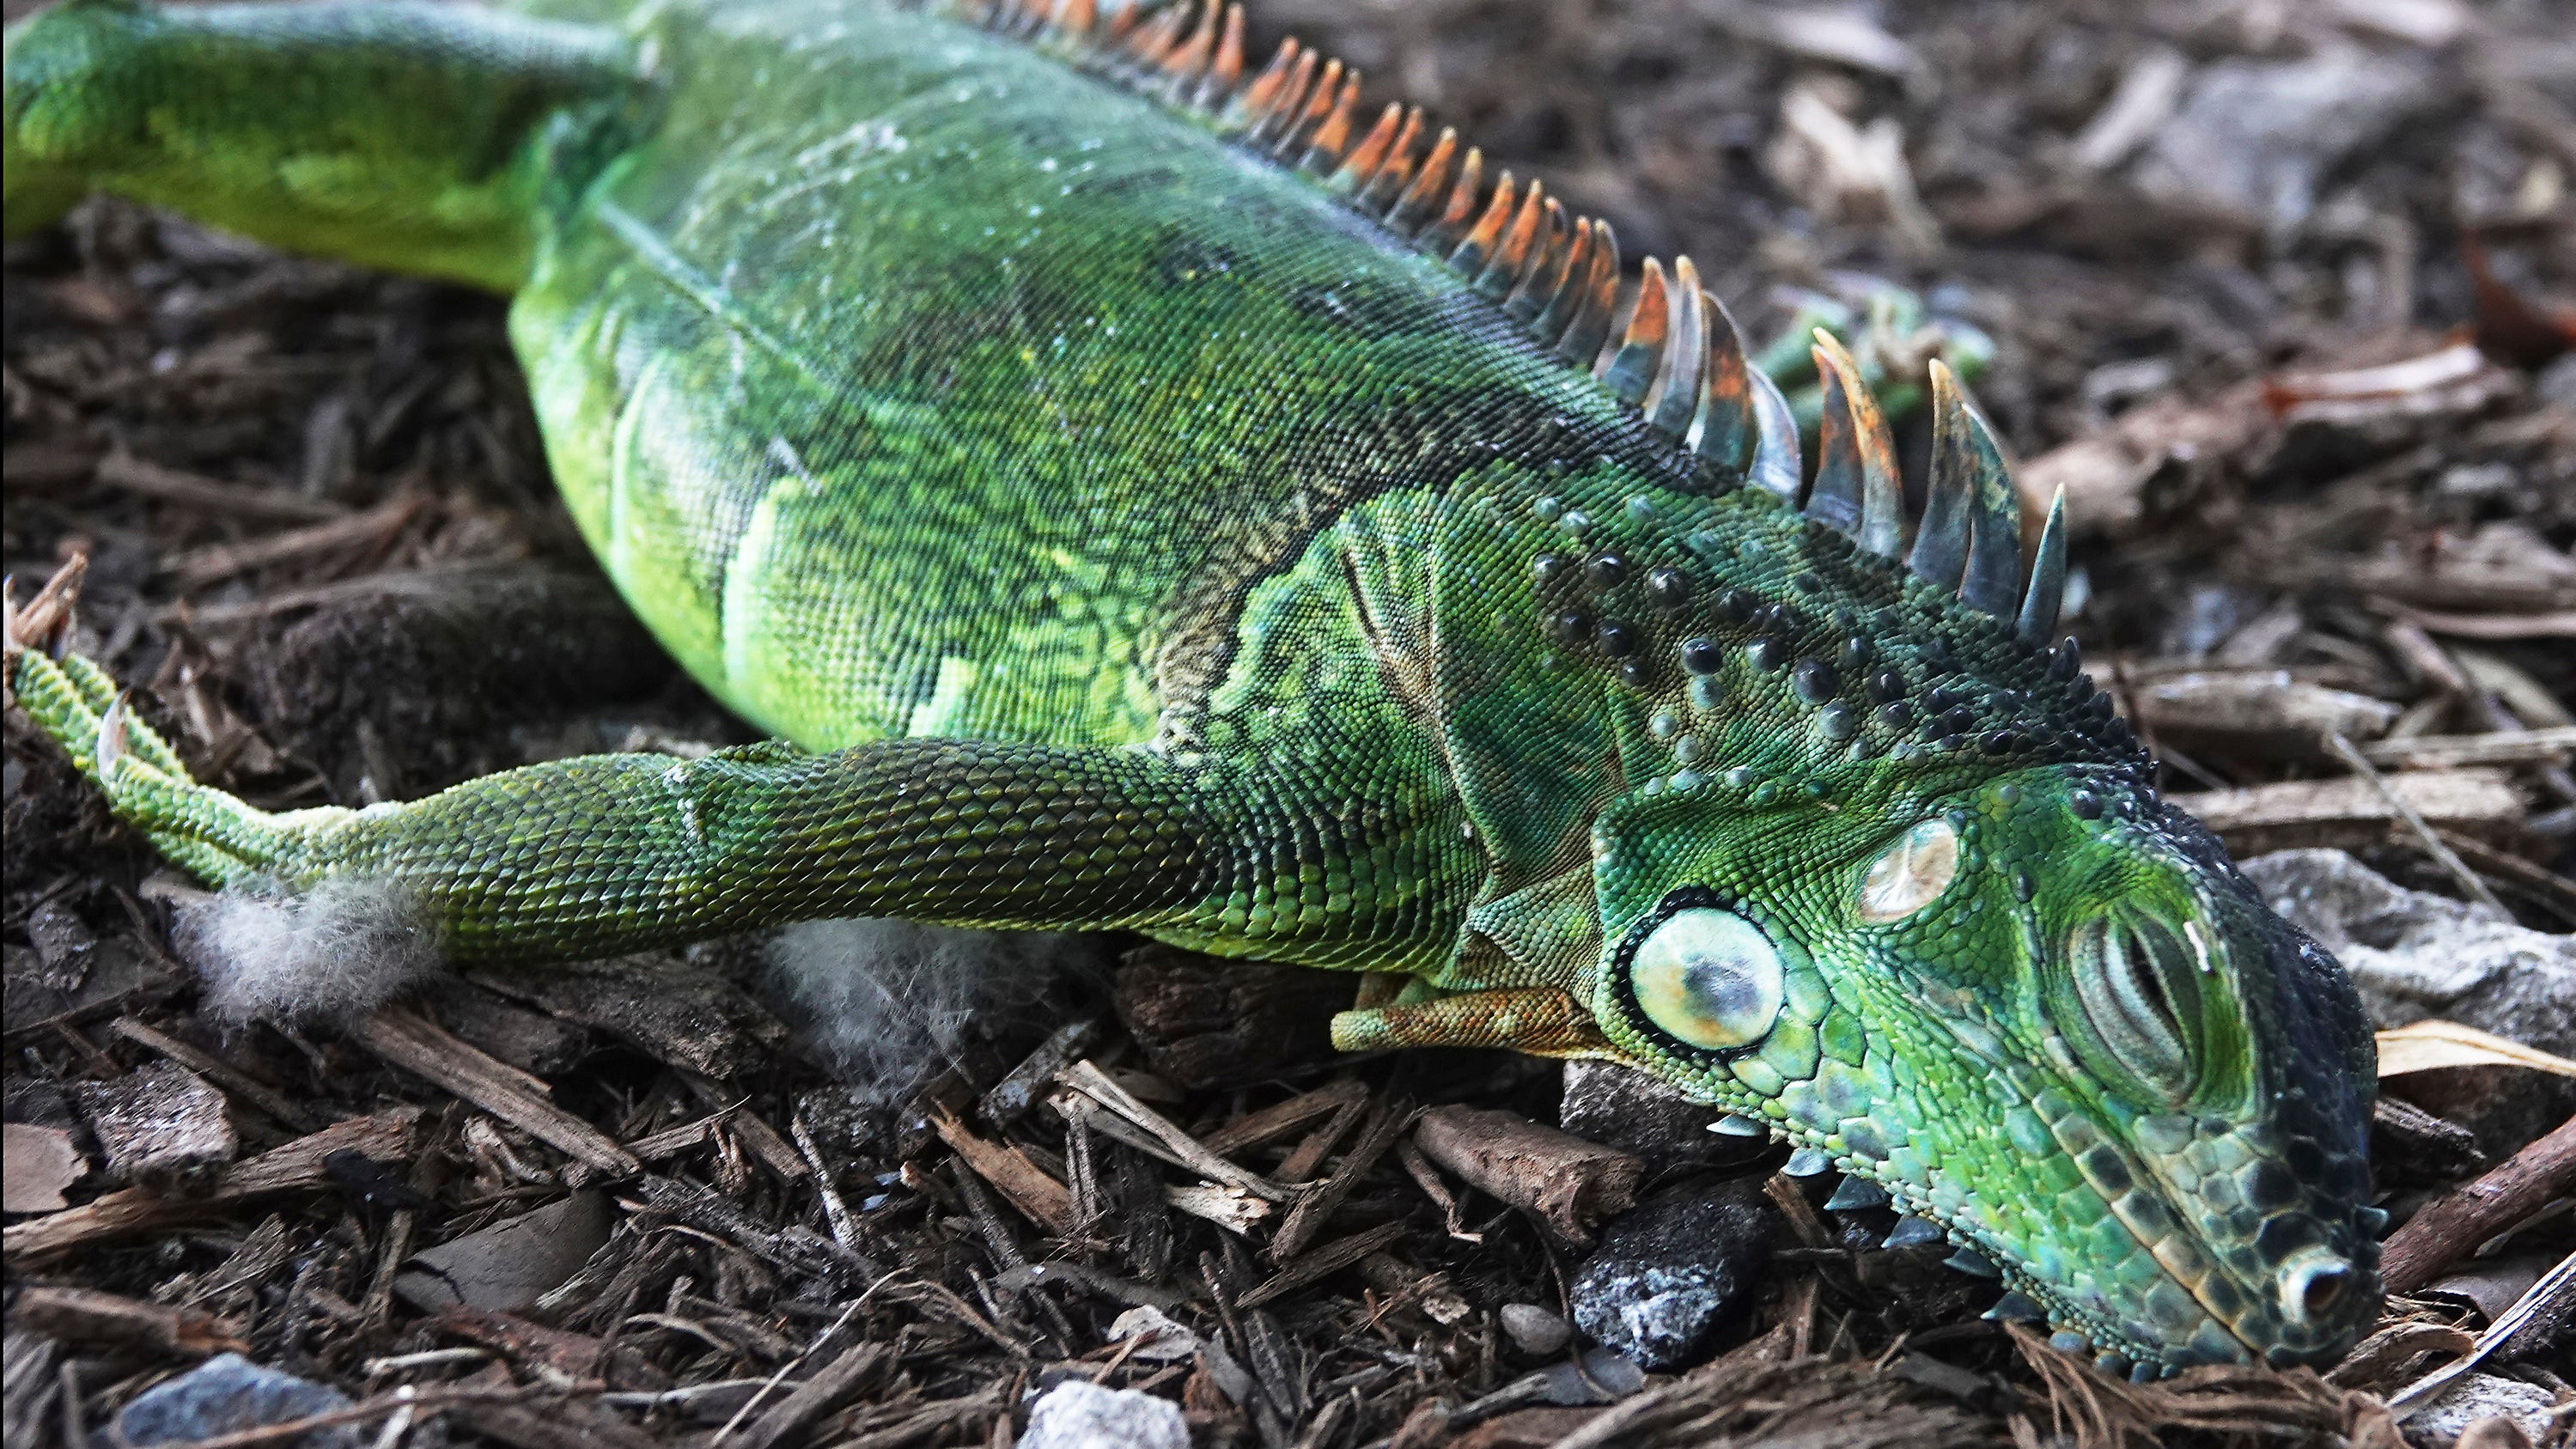 Florida weather: Falling iguanas prompts sale of iguana meat